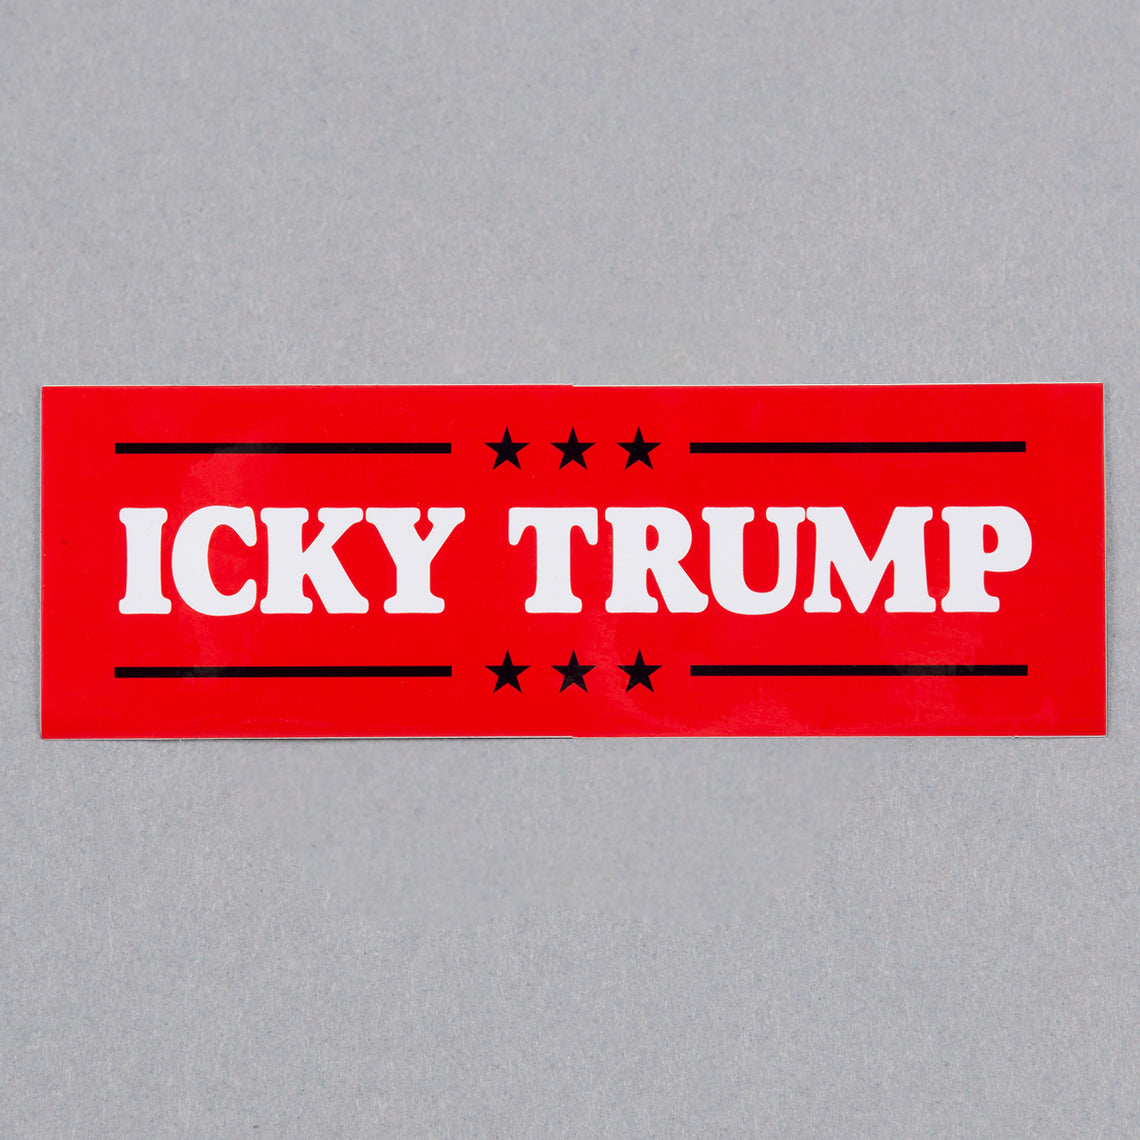 Icky Trump Sticker